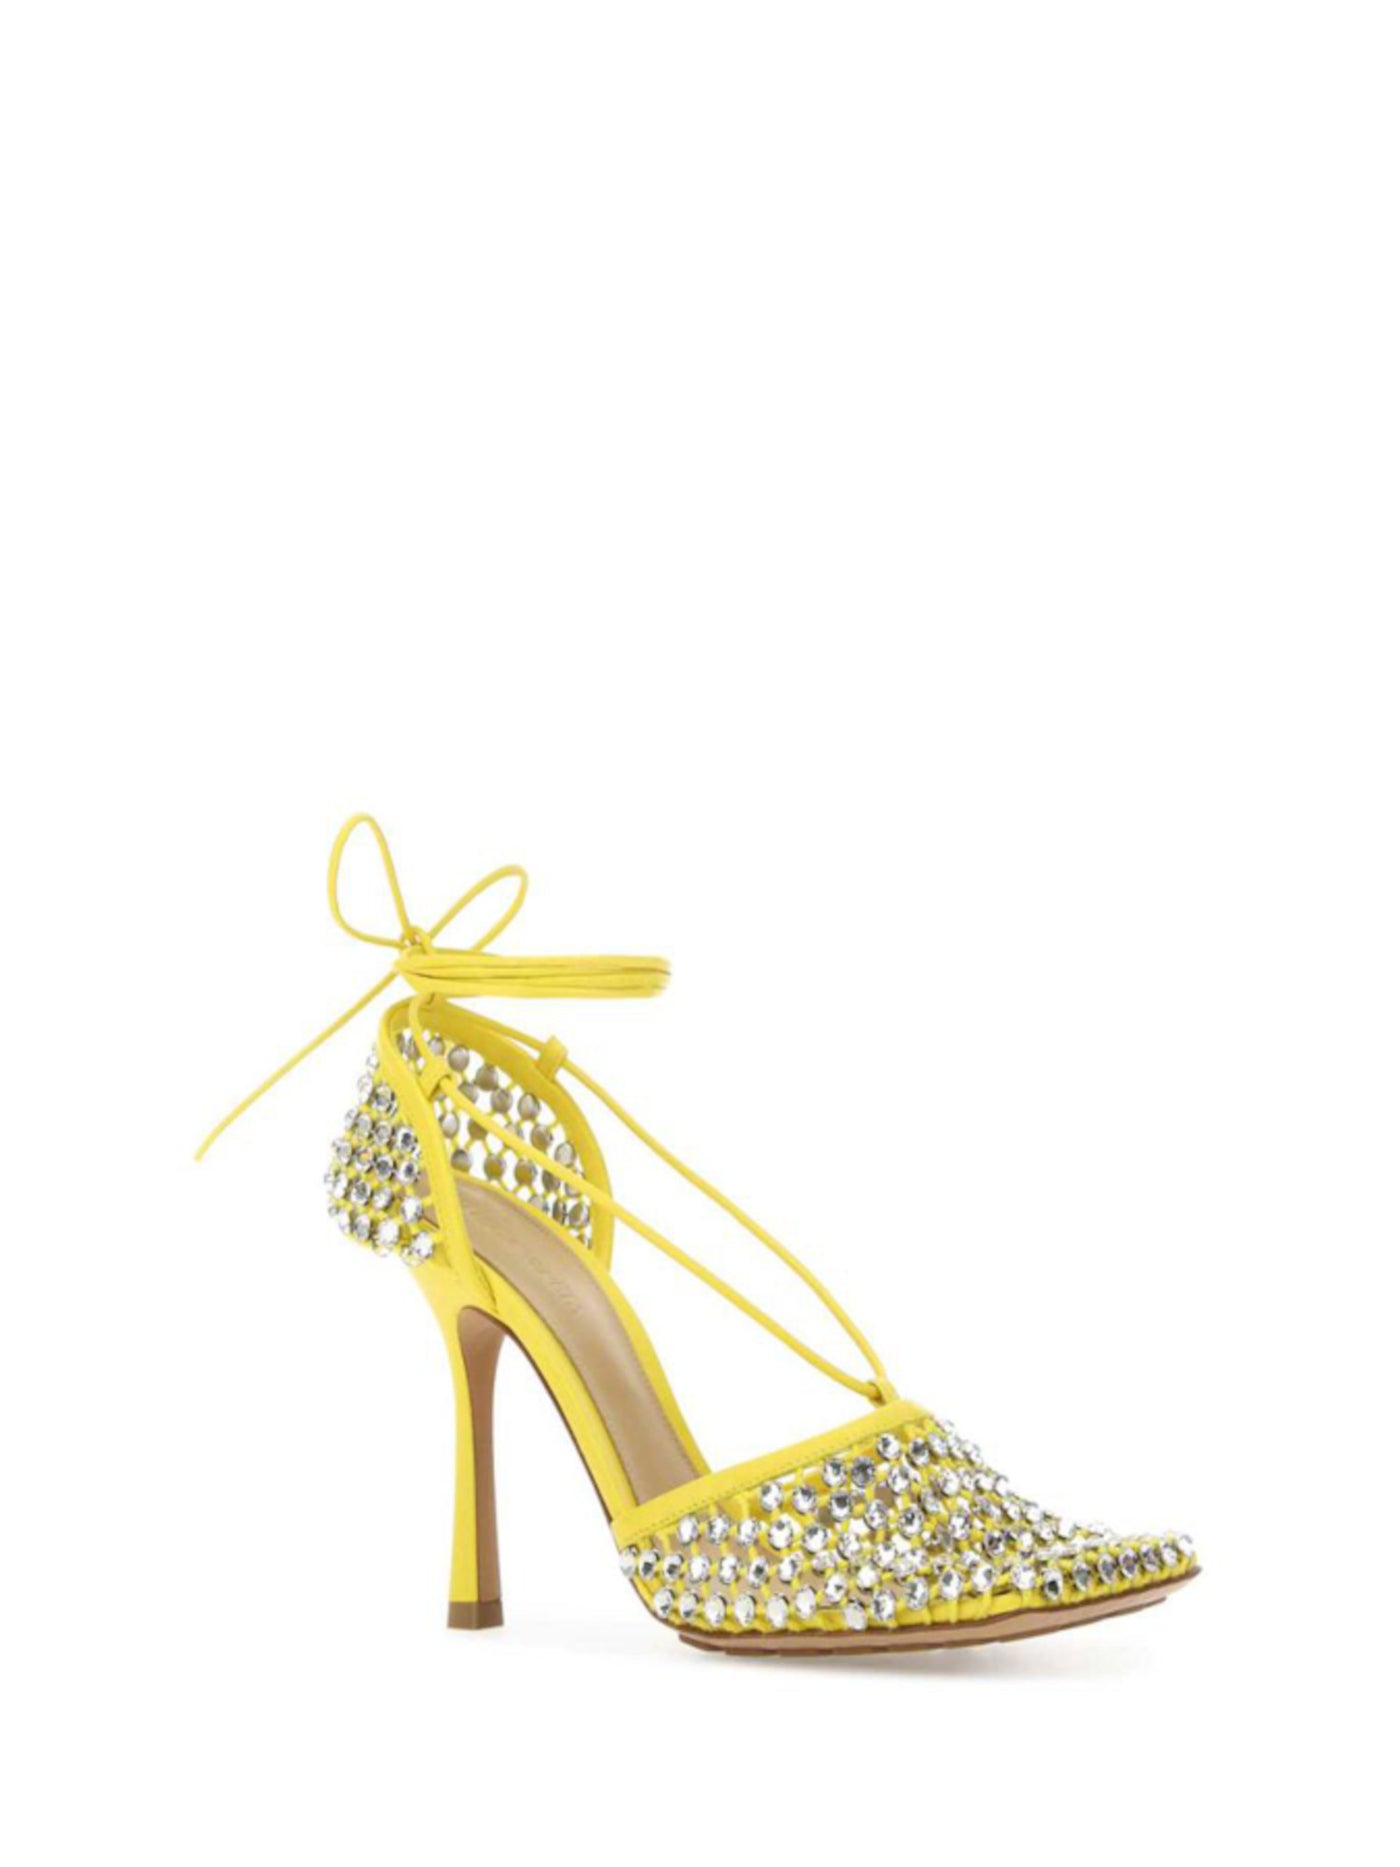 BOTTEGA VENETA Womens Yellow Tie Ankle Strap Embellished Square Toe Stiletto Slip On Leather Pumps Shoes 38